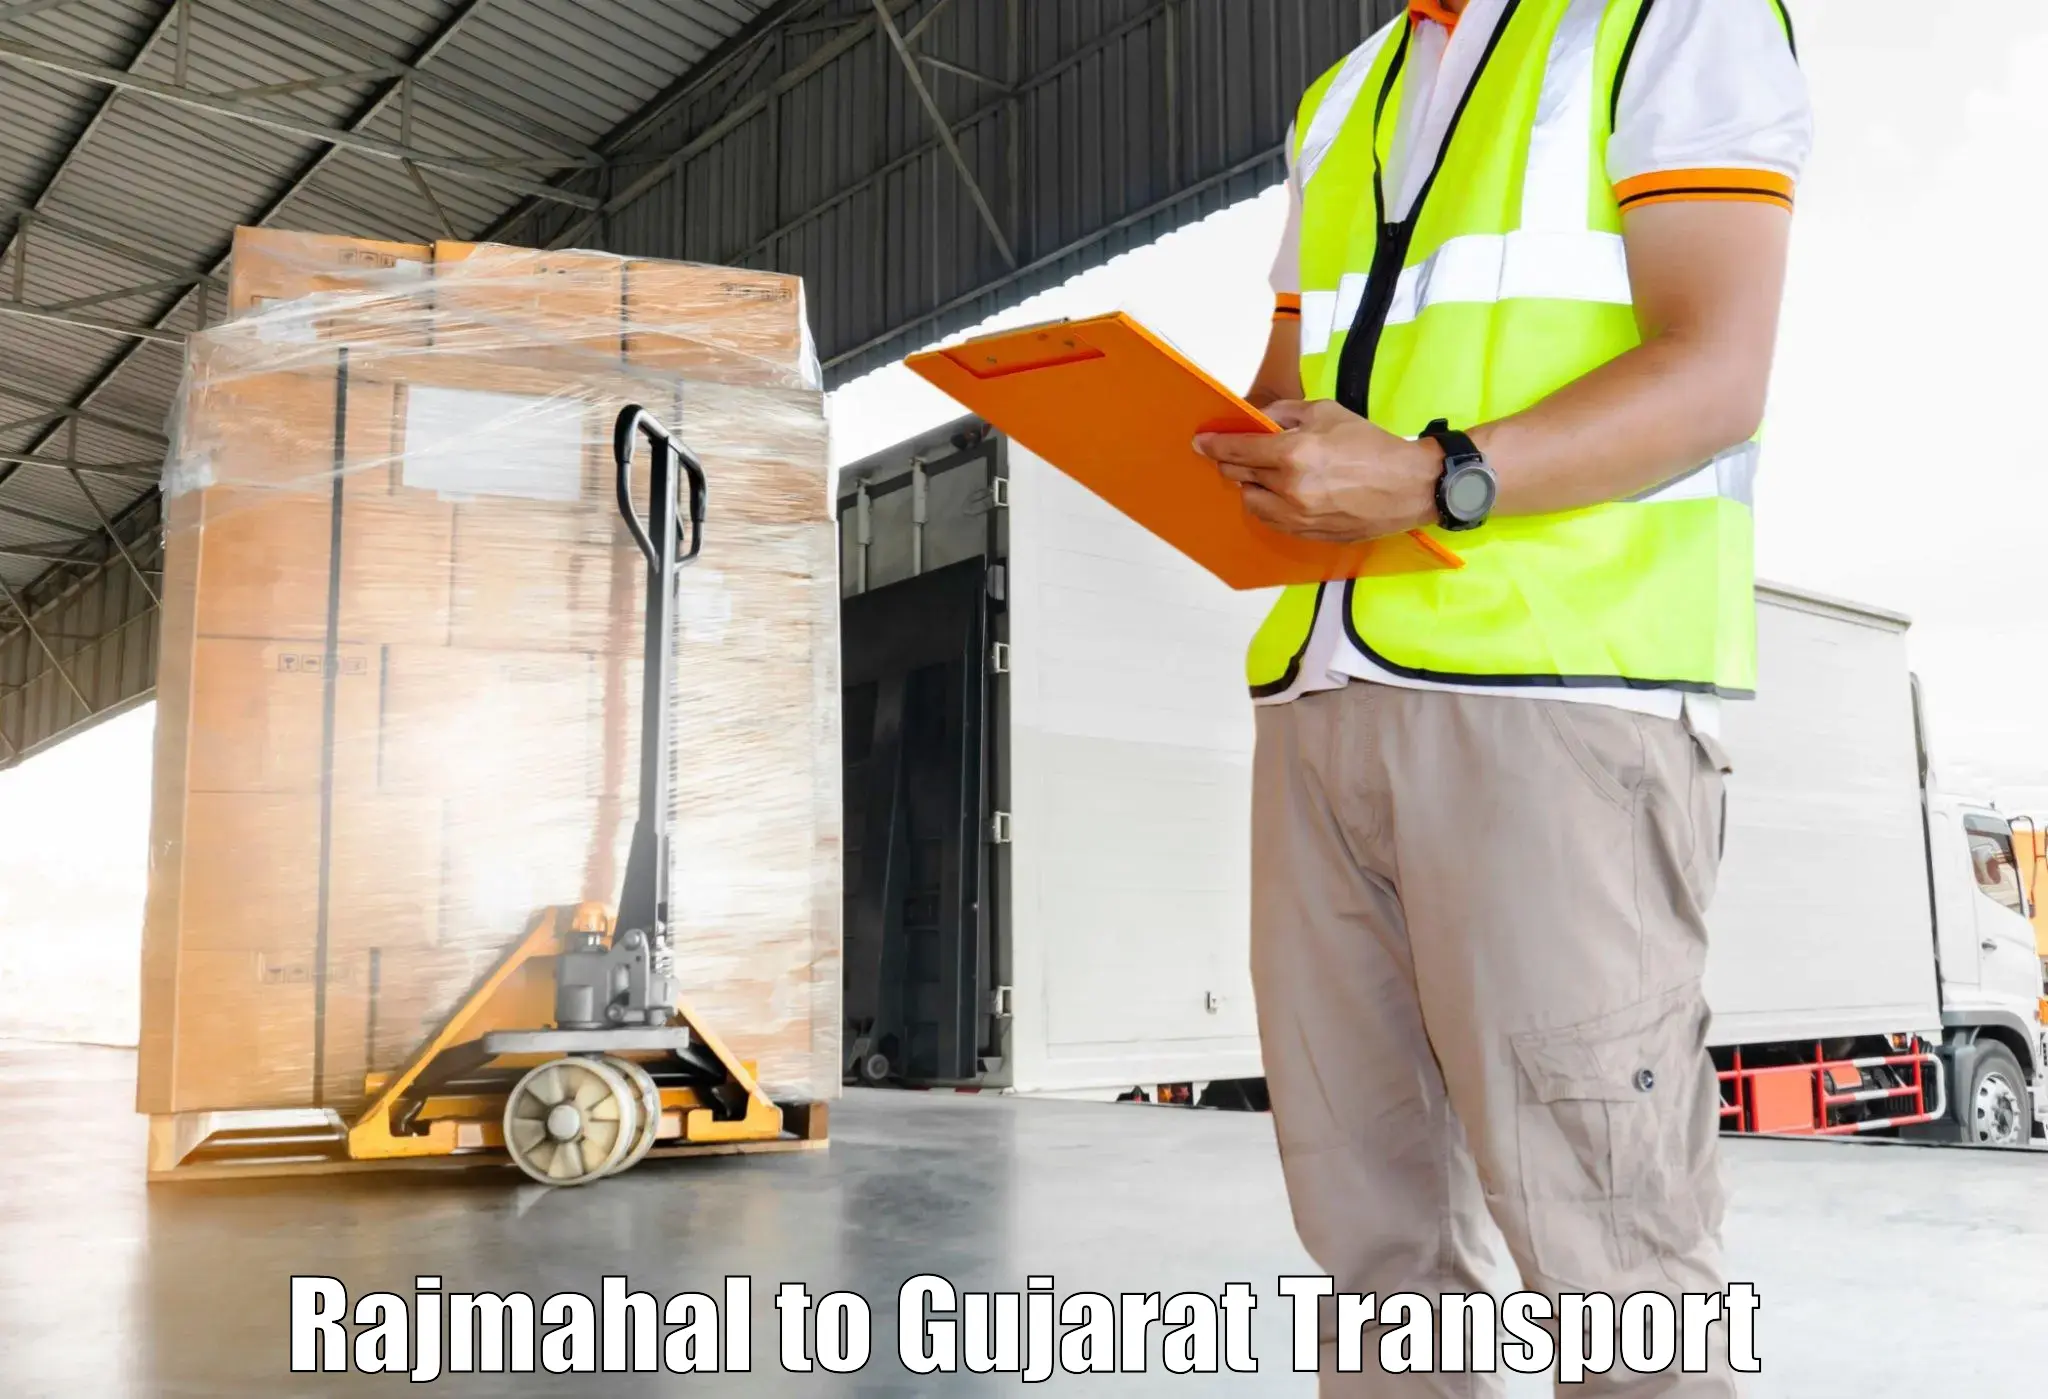 Truck transport companies in India Rajmahal to Dahod